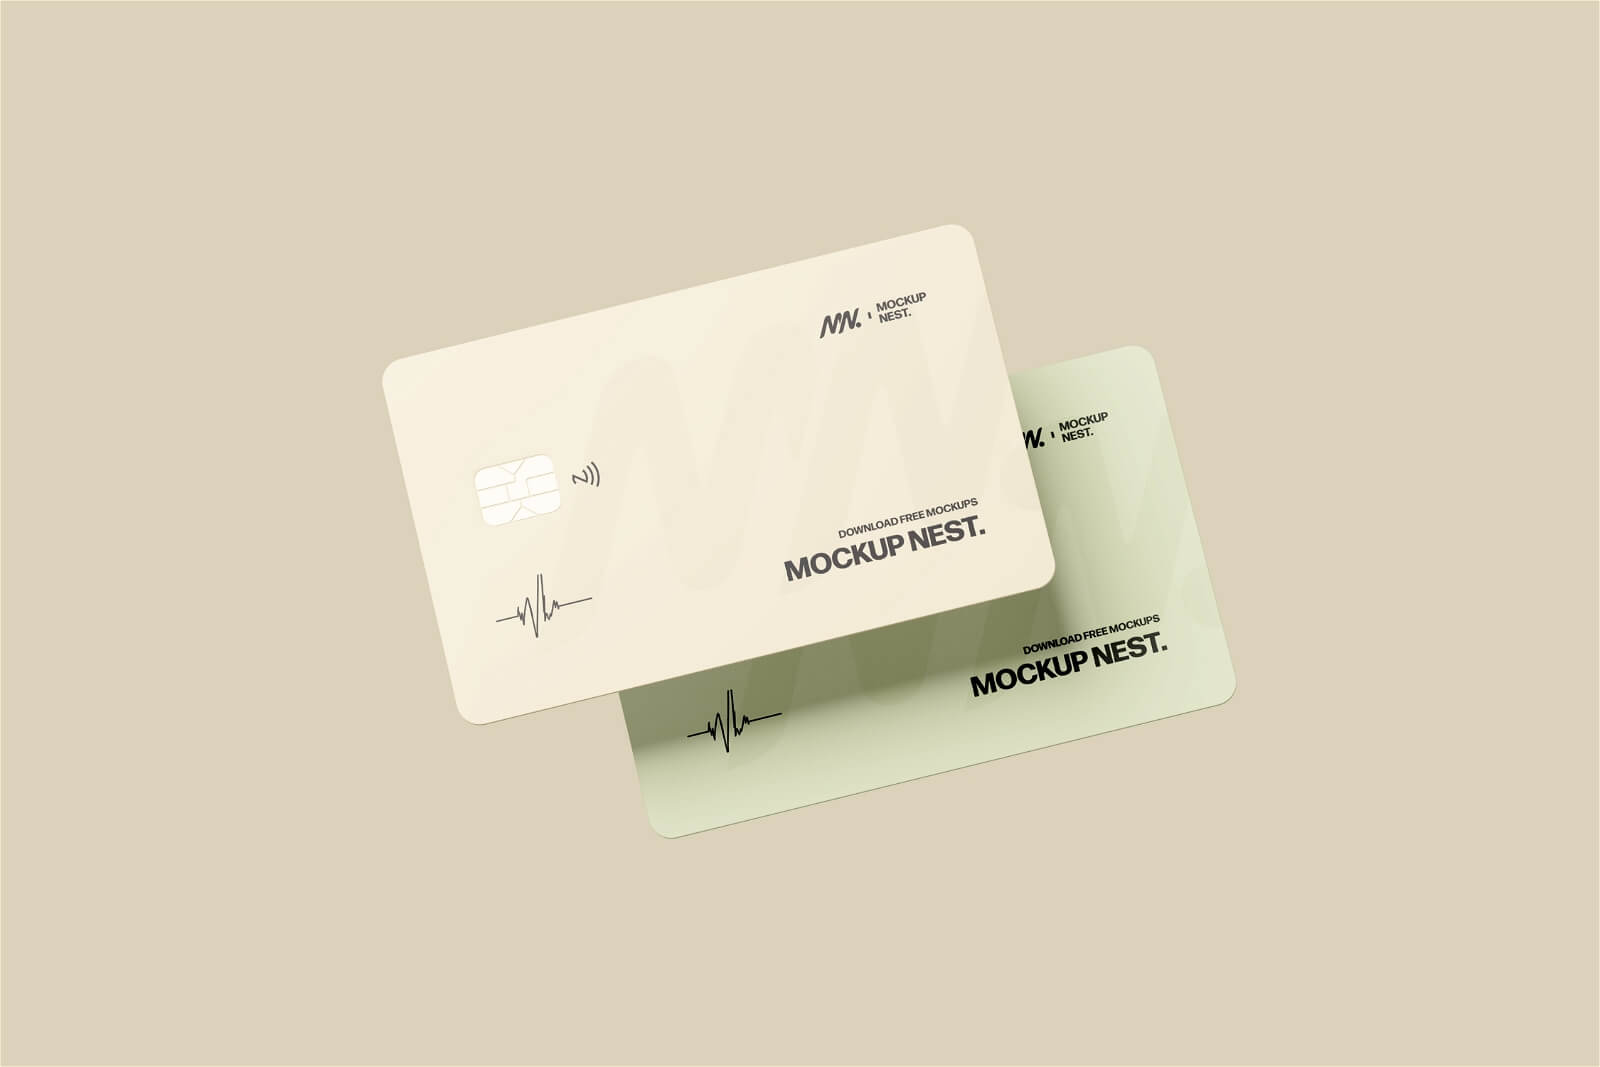 Free Floating Credit Card Mockup PSD Set